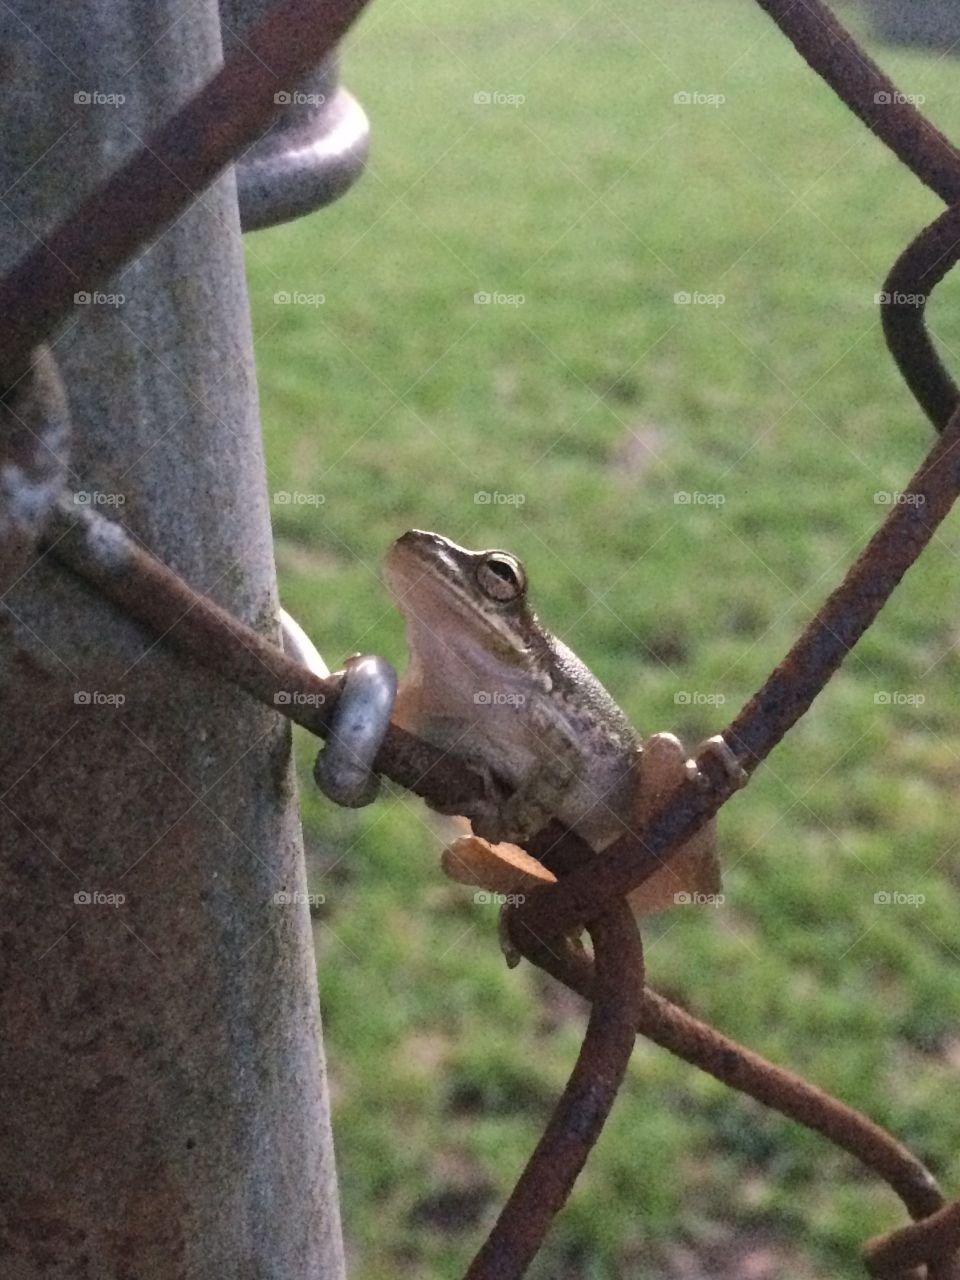 Cute, little tree frog on my fence 😍